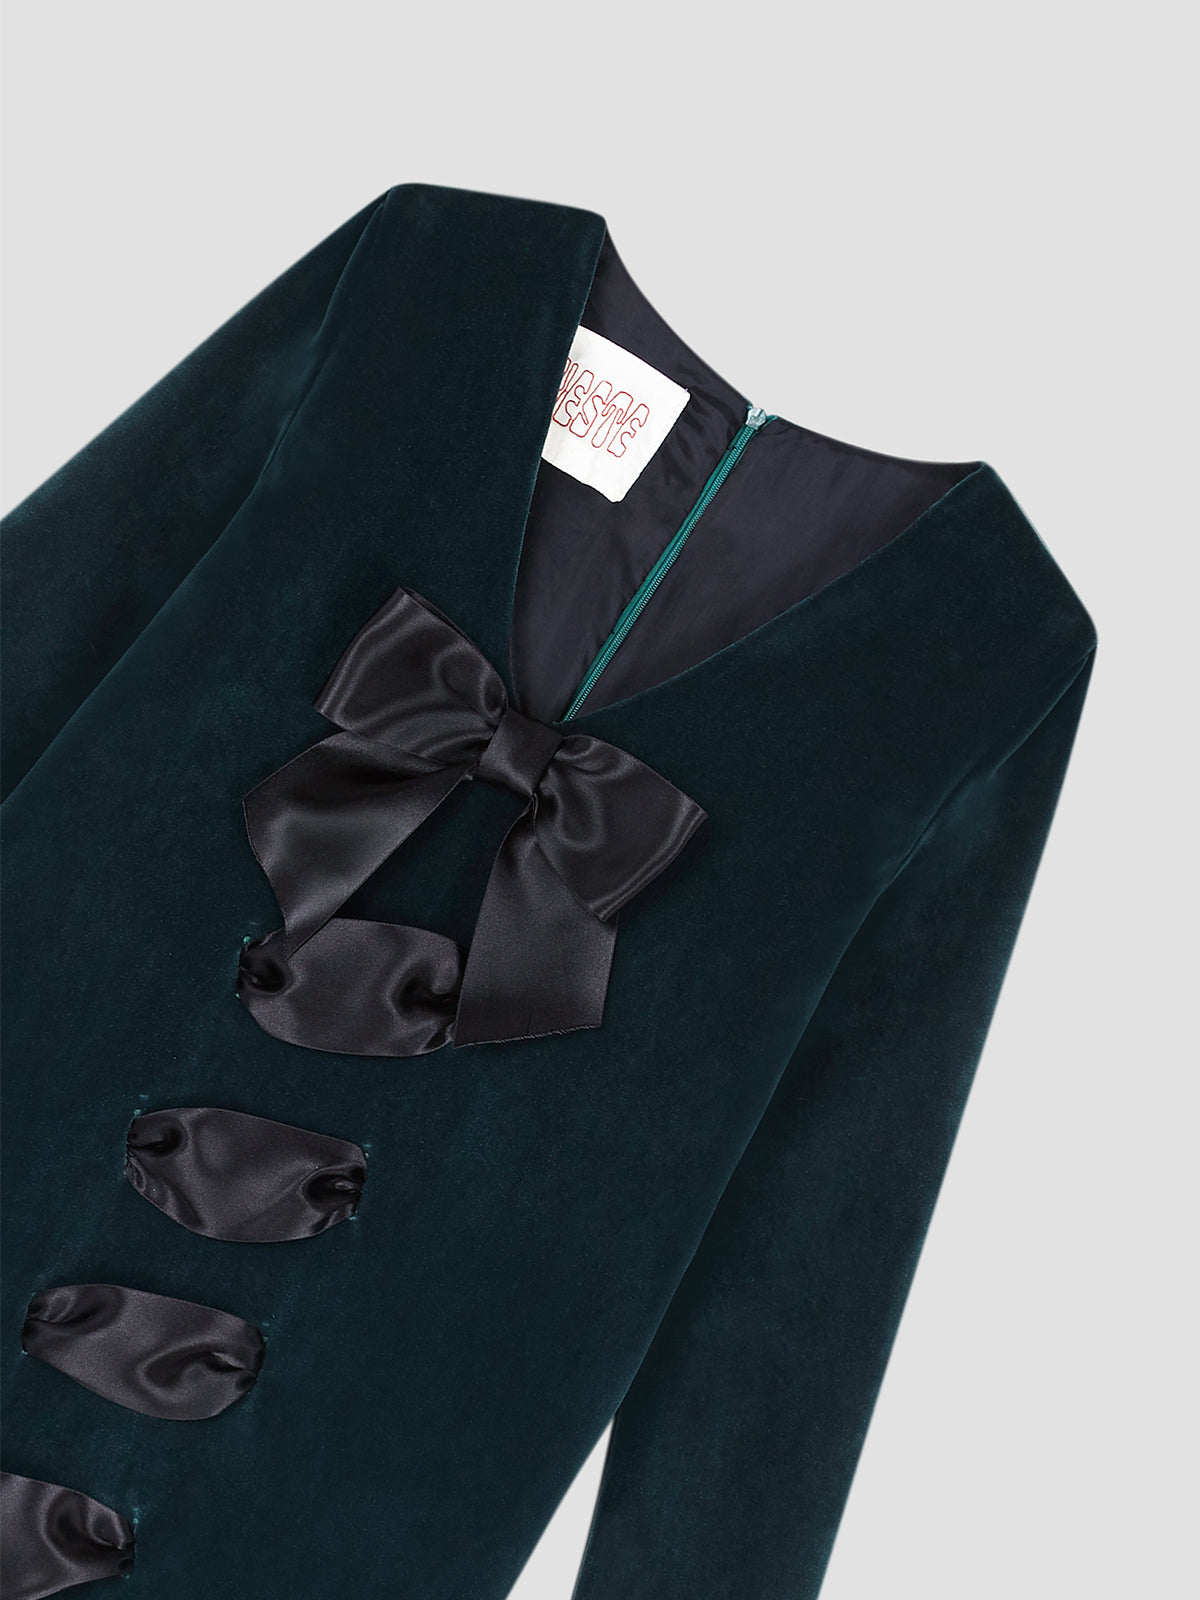 Color: Dark Green/Black.   Long dress made in dark green velvet with black satin bow on the front.   Regular fit. Long length.  V-neckline.  Long sleeves. Zipper closure at the back.